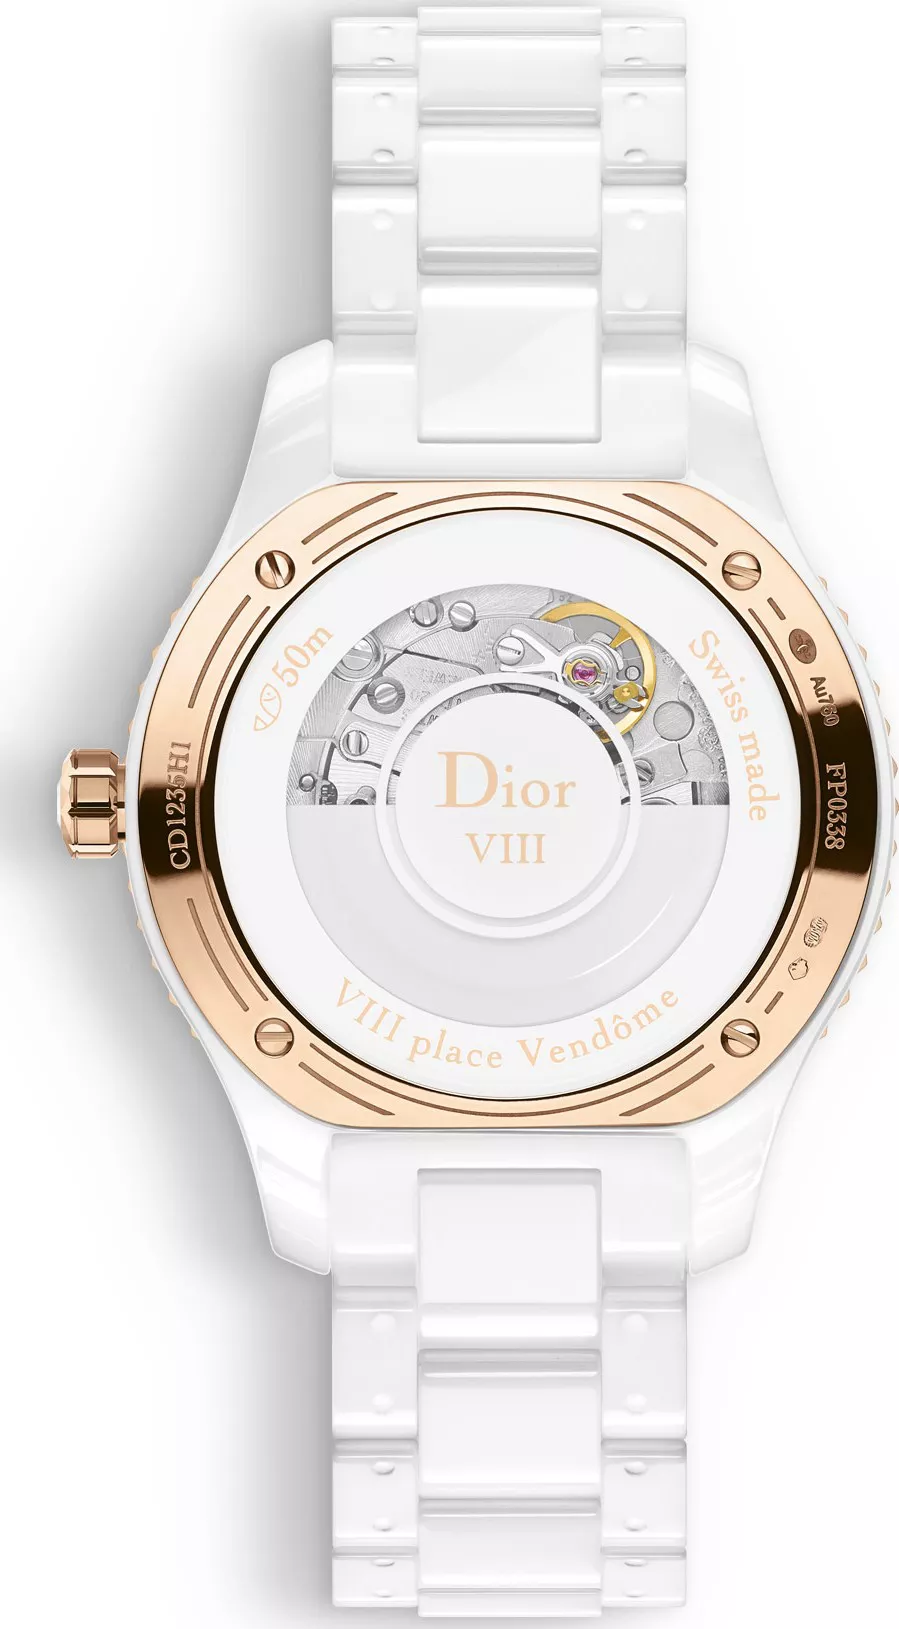 Christian Dior Dior VIII CD1235H1C001 Automatic 33